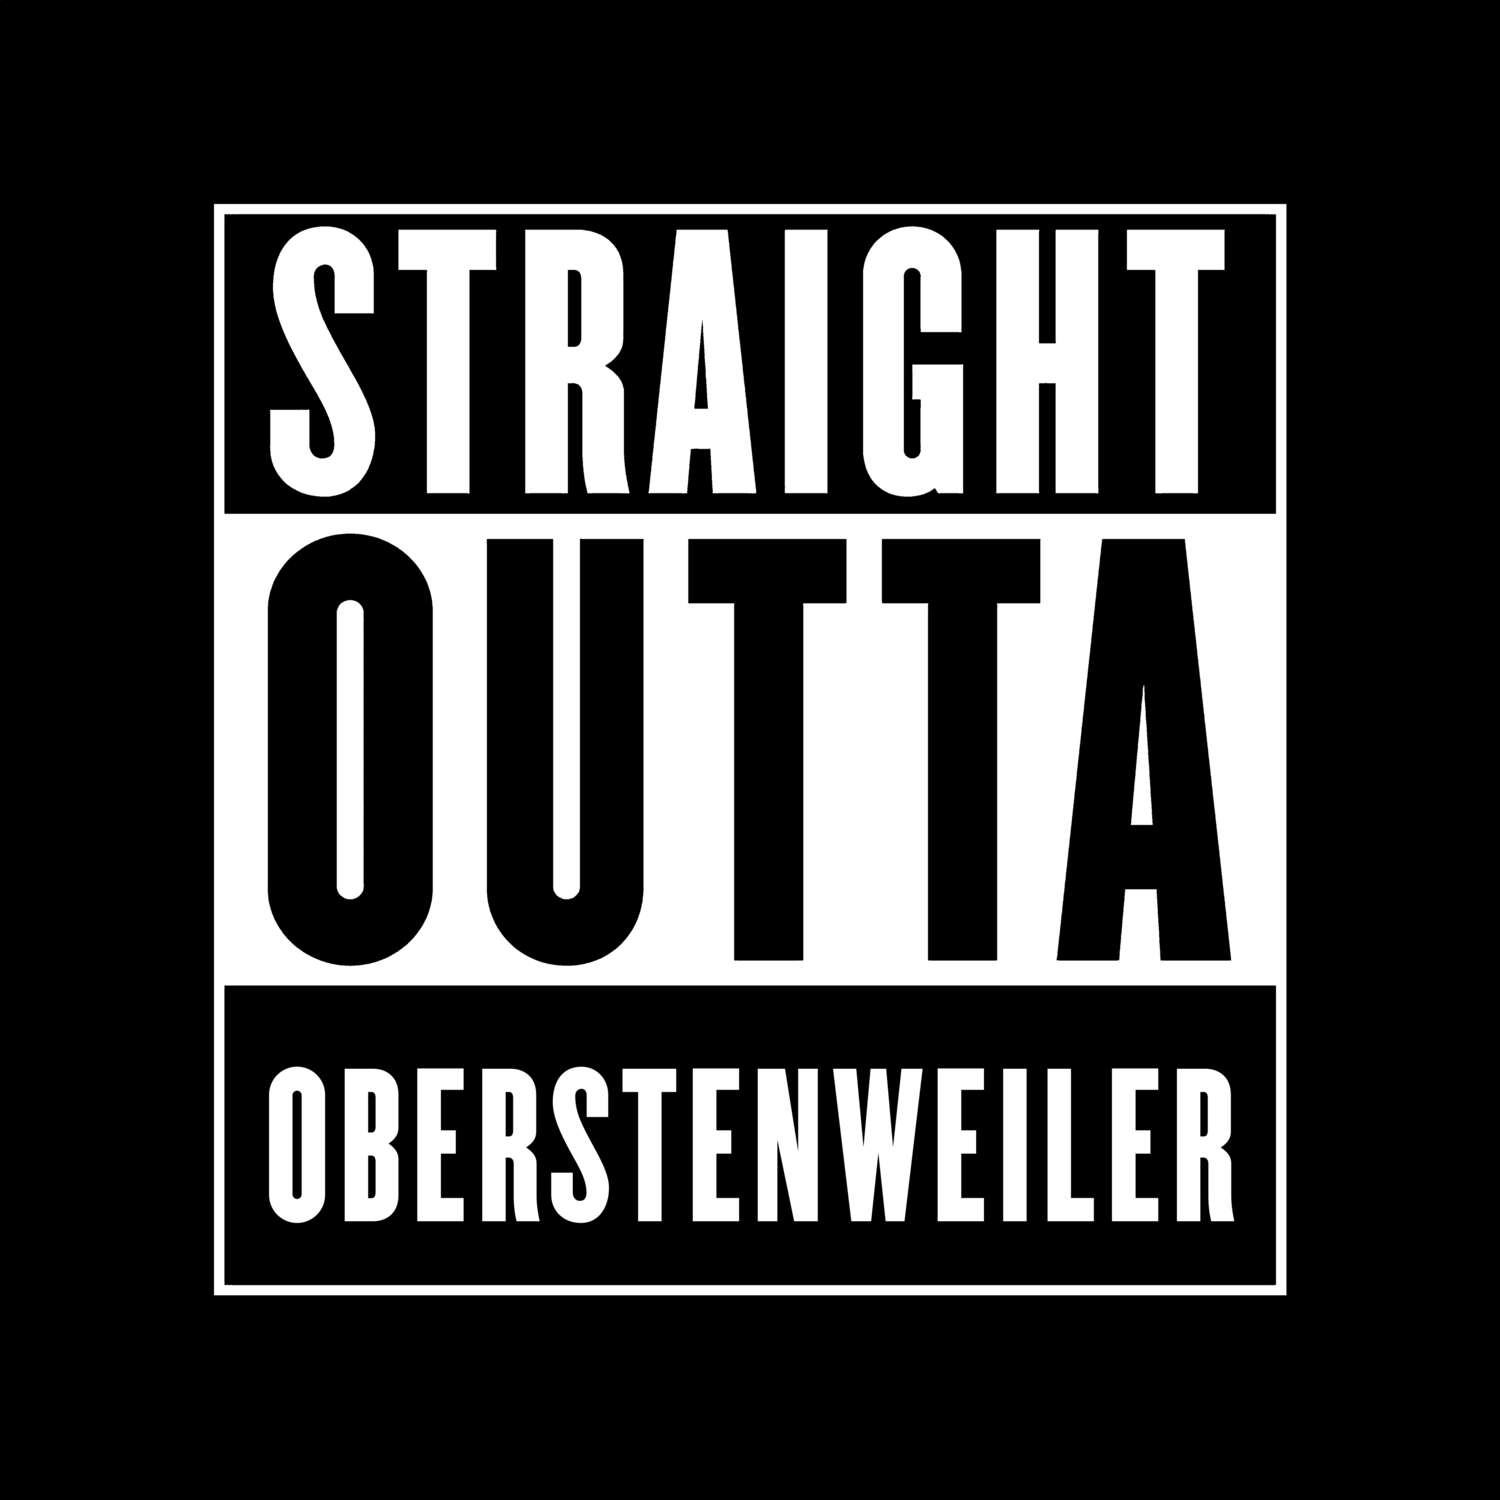 Oberstenweiler T-Shirt »Straight Outta«